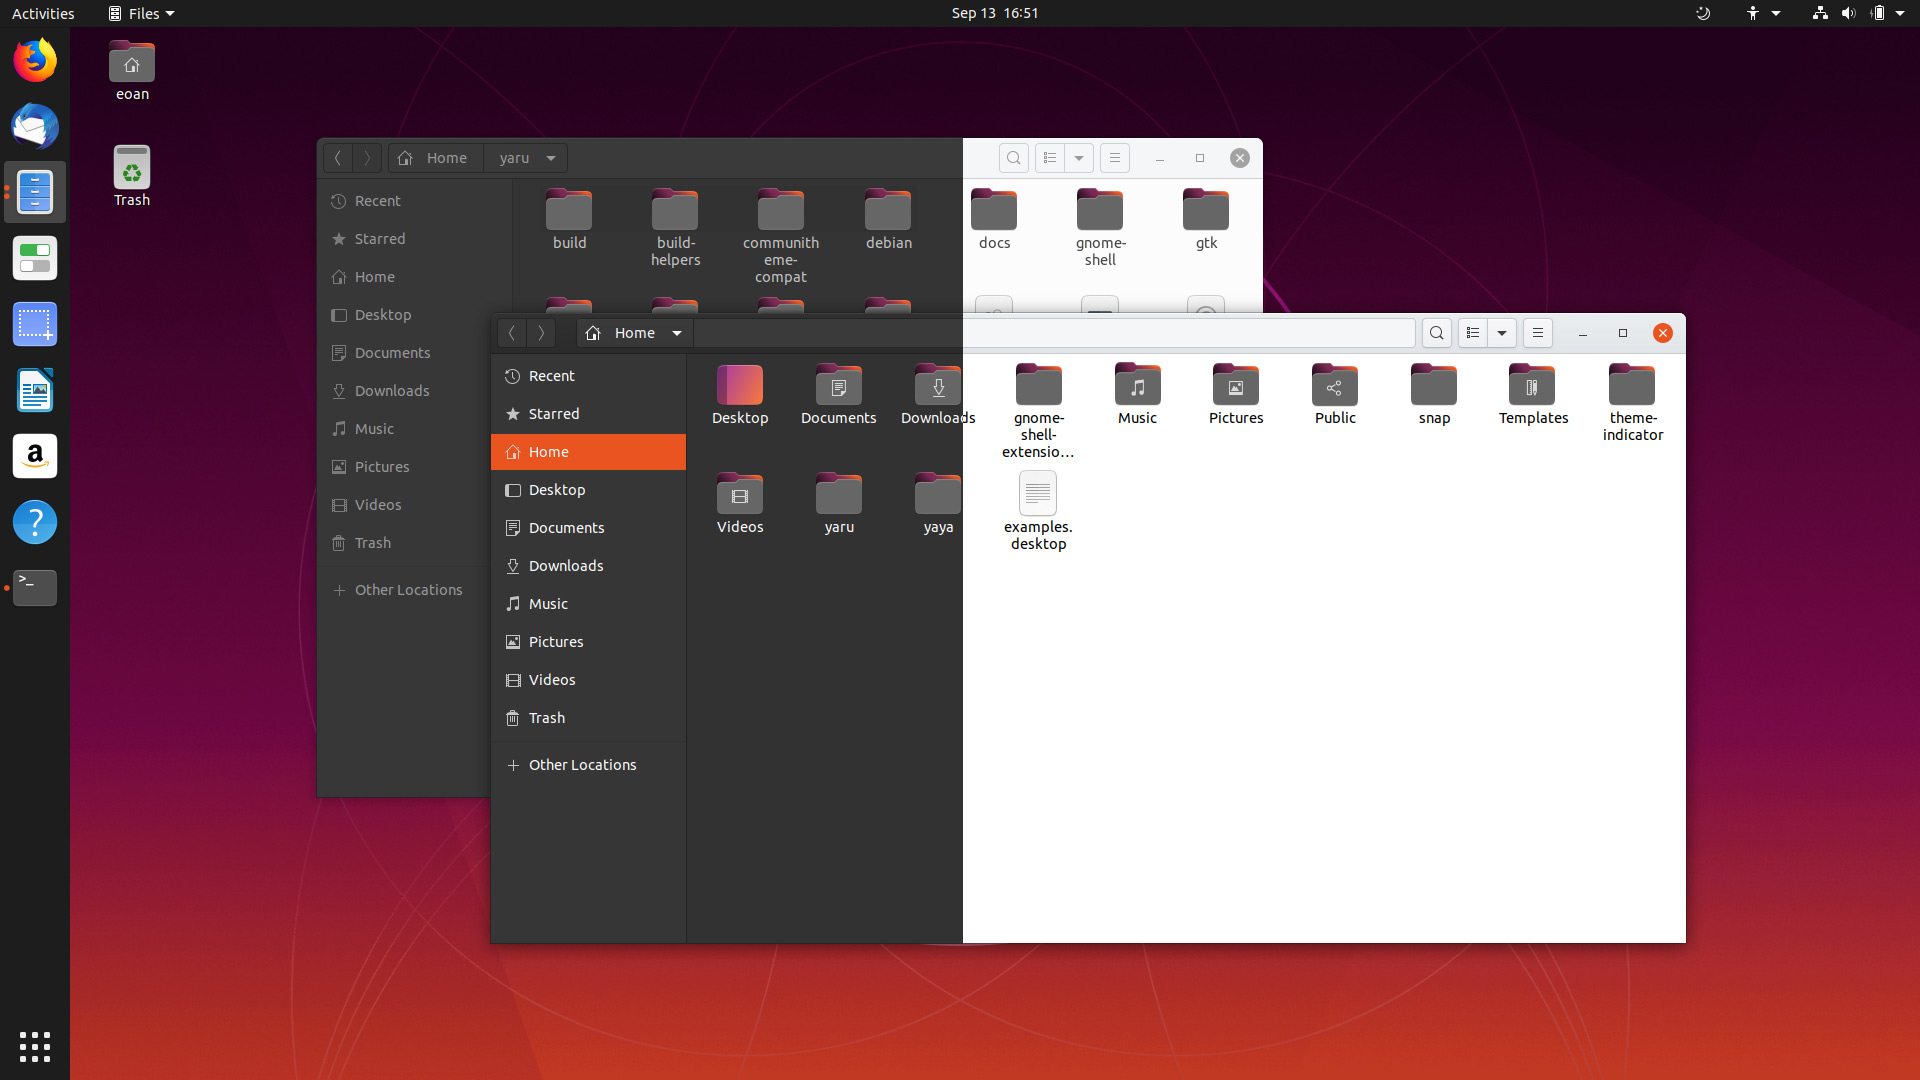 Ubuntu Makes Major Change to its Appearance Ahead of 20.04